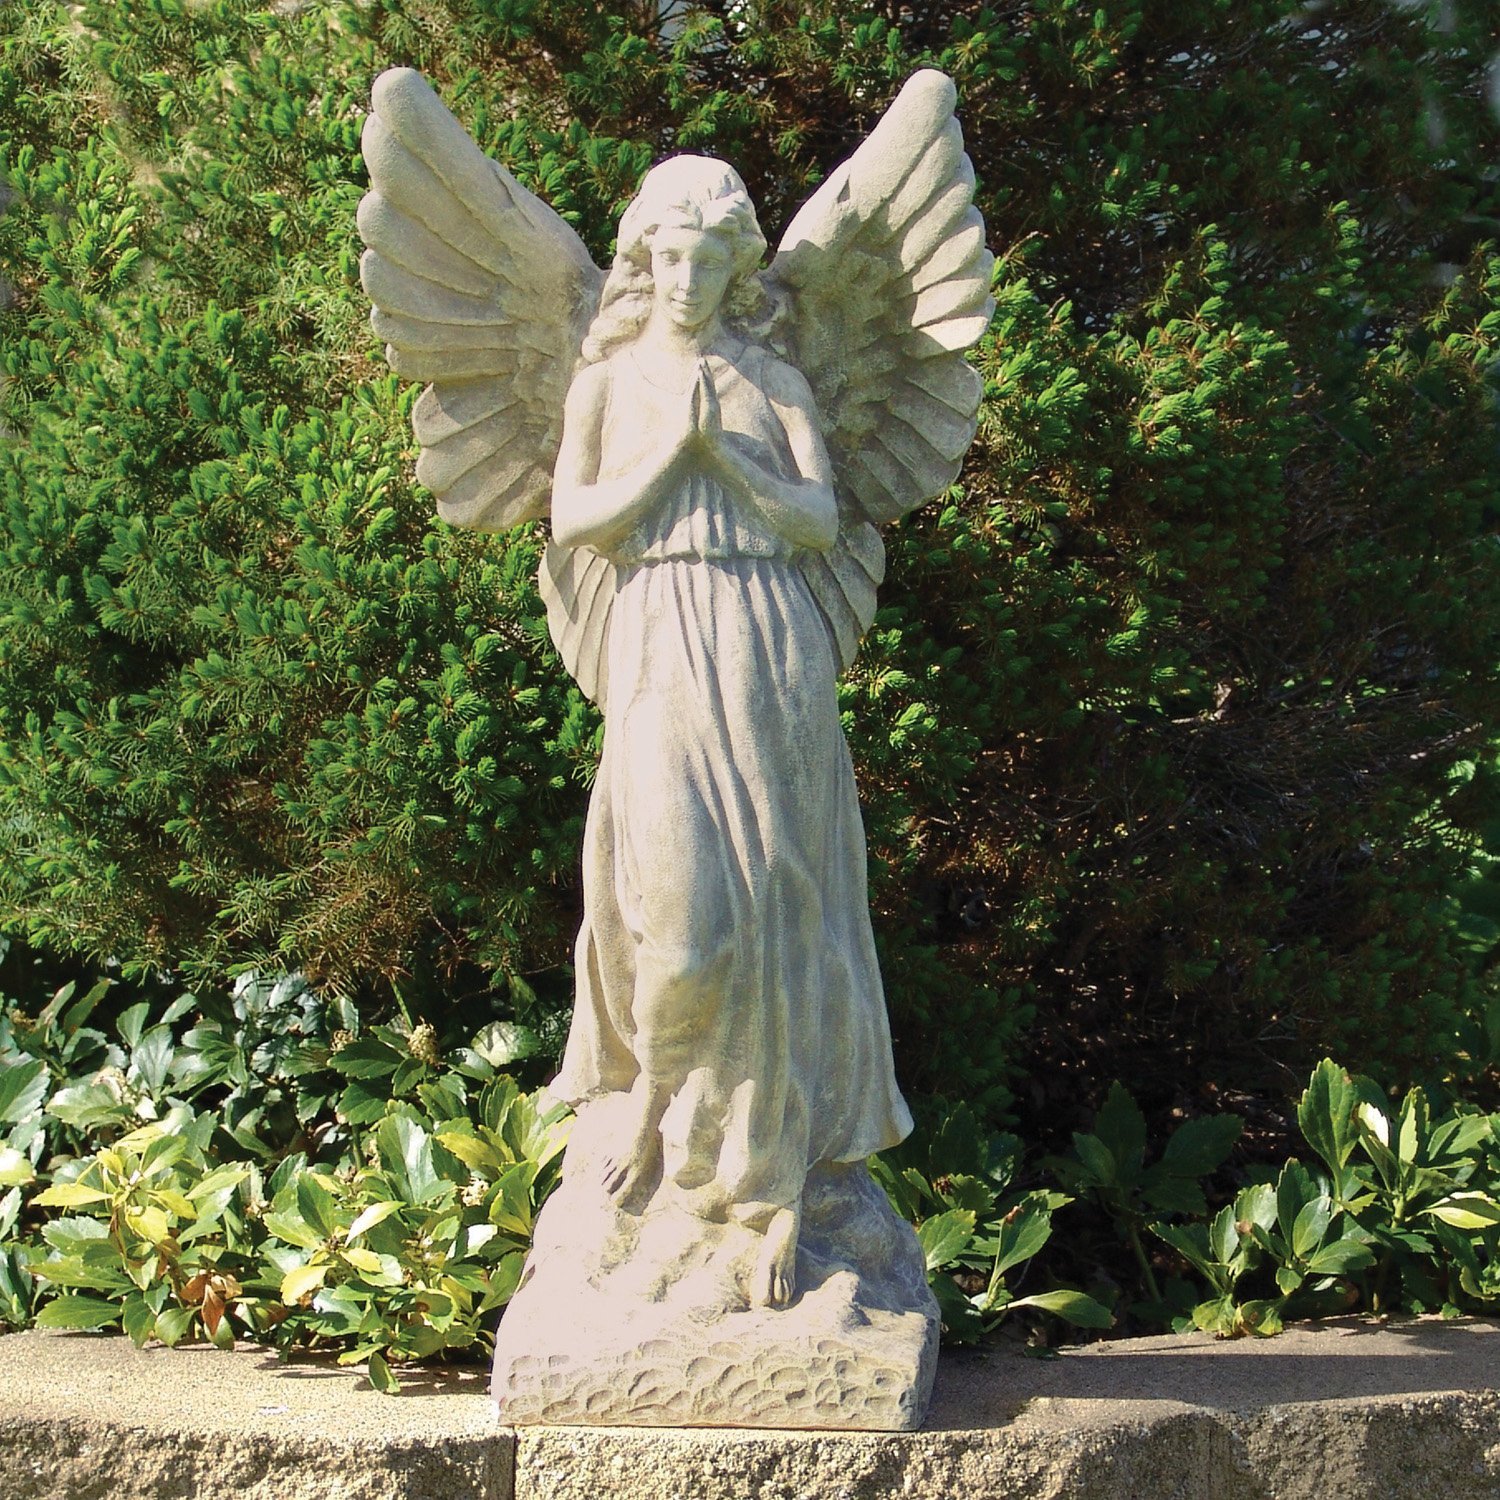 Amazon.com : Sculptural Gardens 23-Inch Guardian Angel Statuary ...